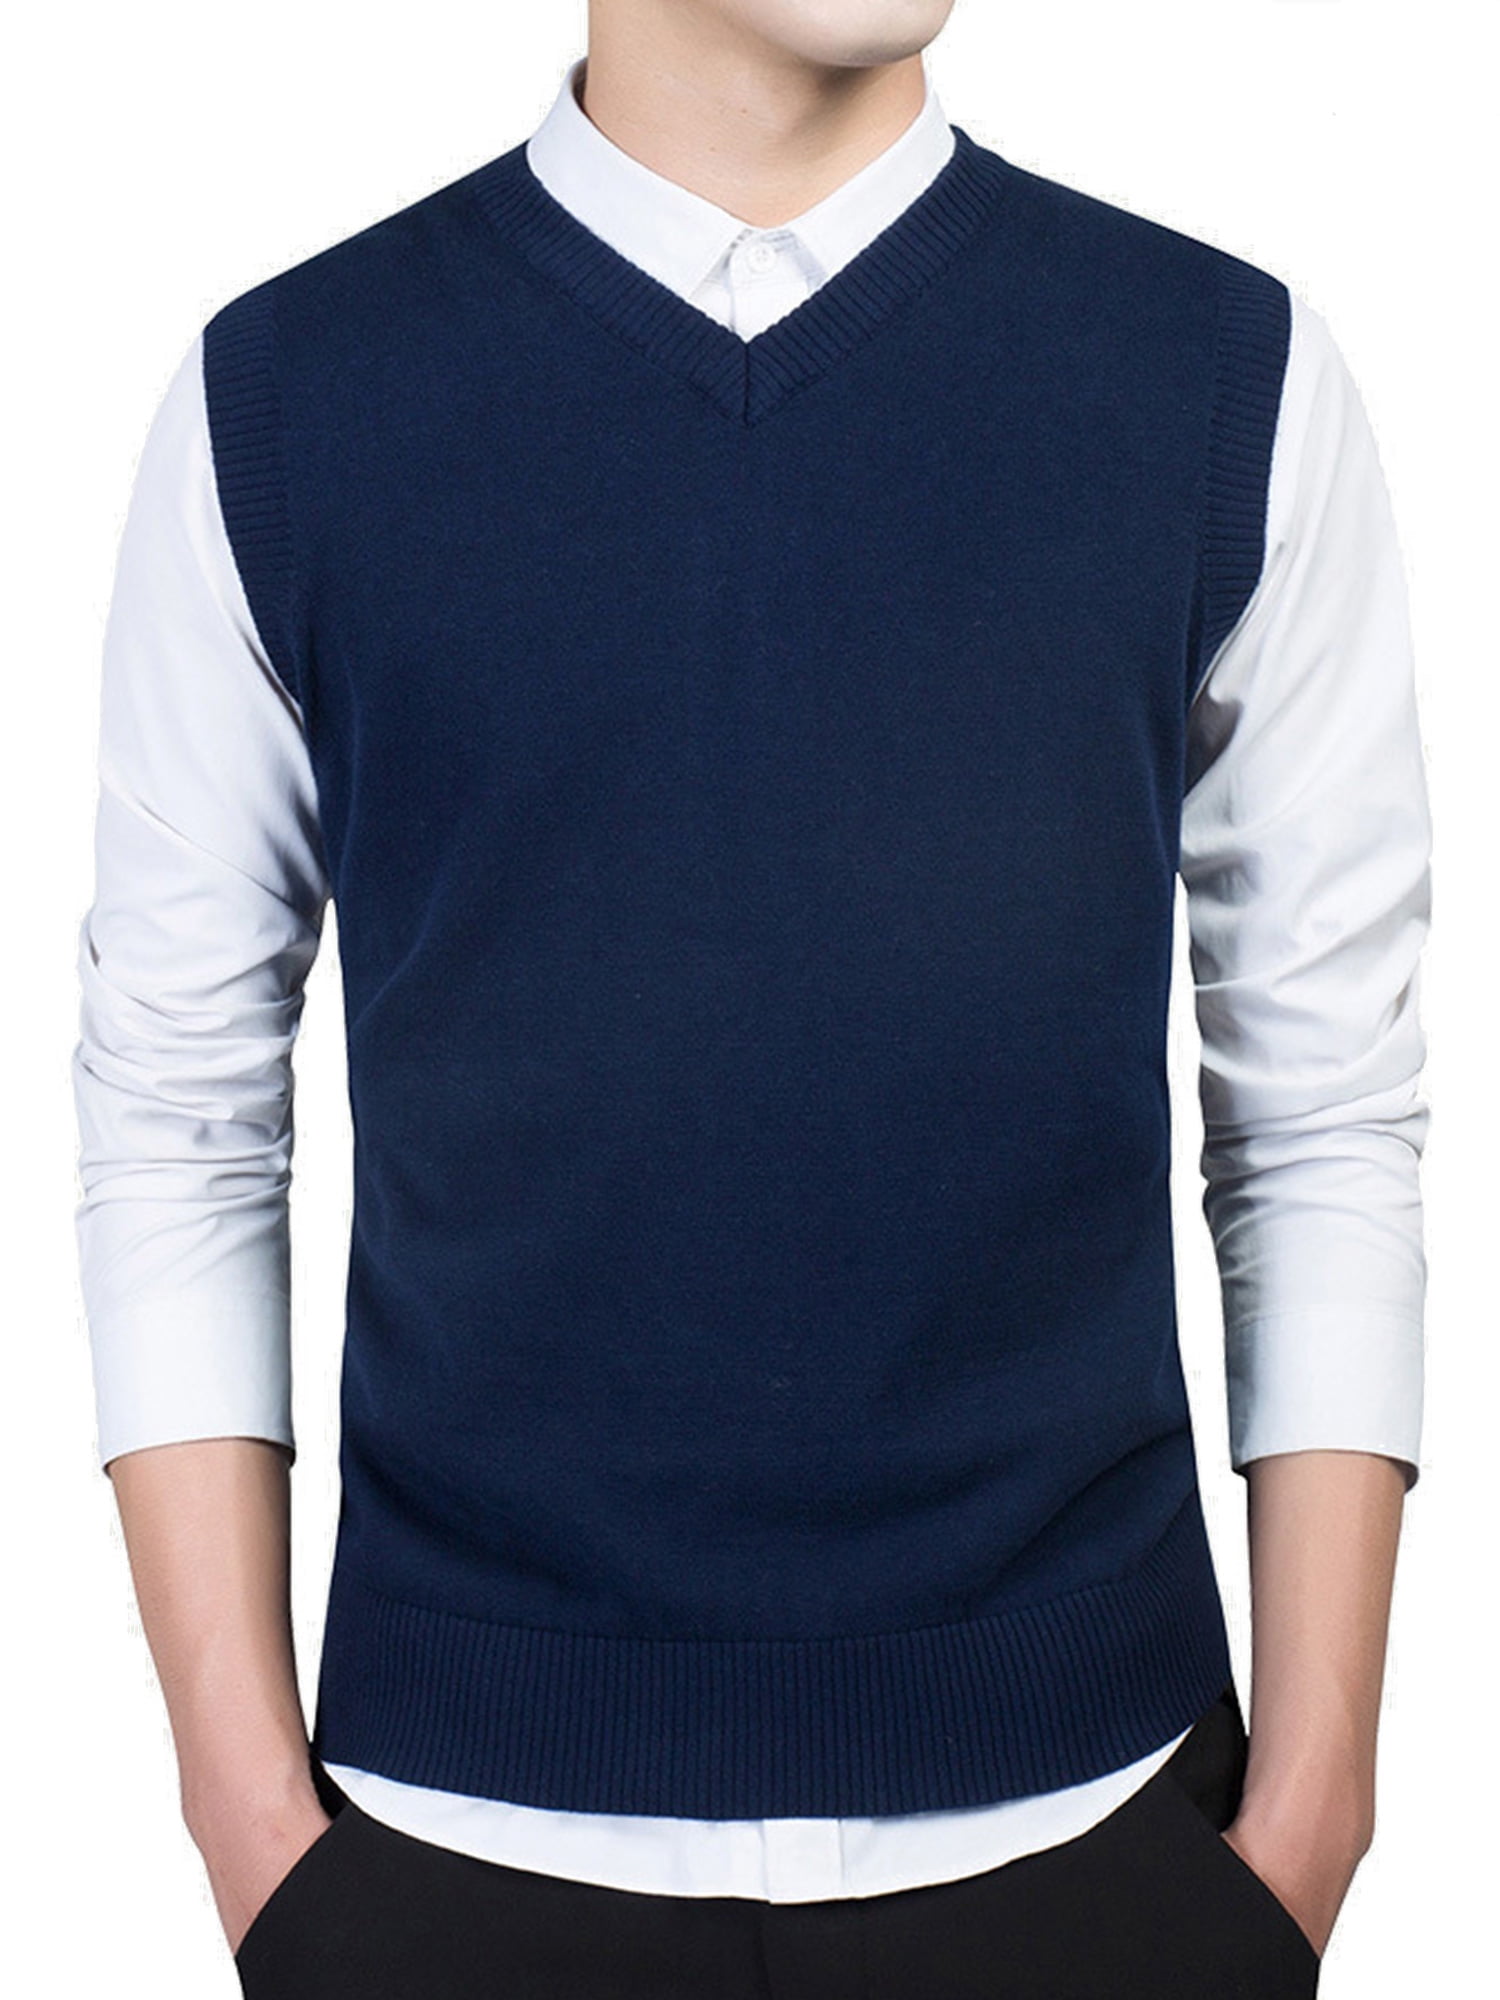 Romwe Men's Cable Knit Solid V Neck Plain Sleeveless Sweater Vest